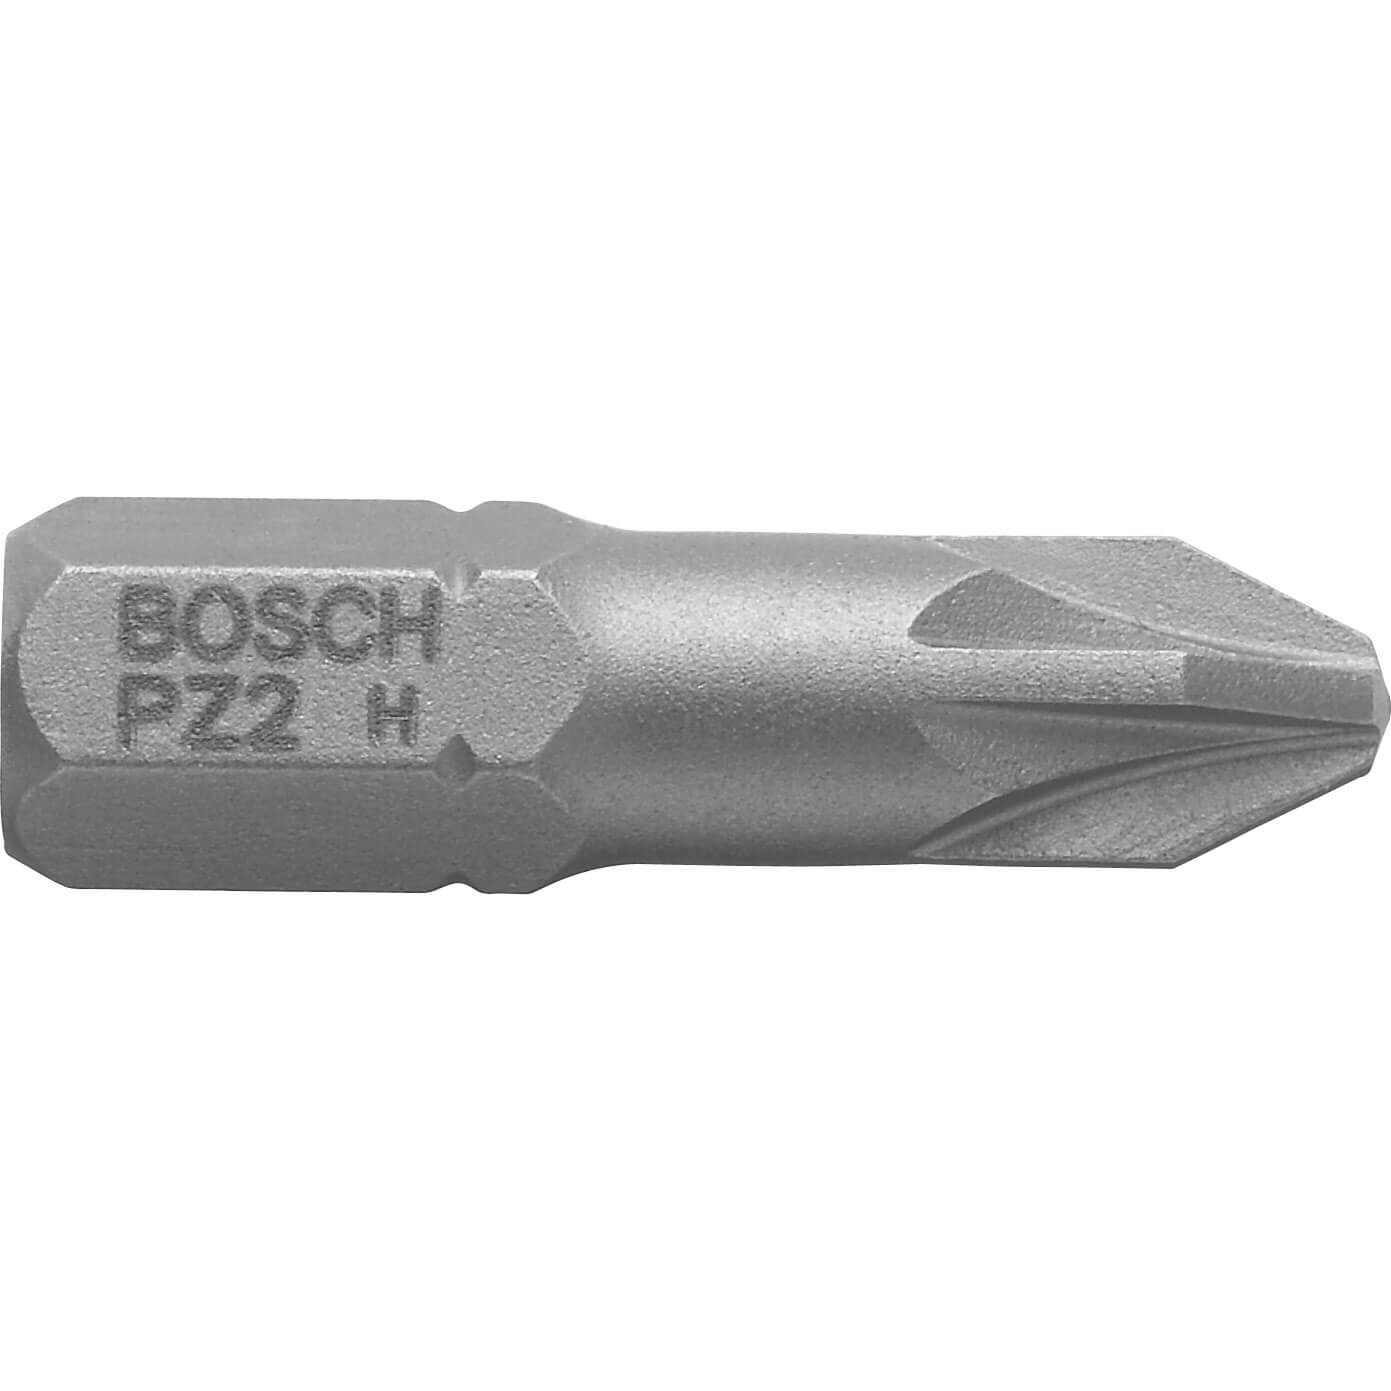 Image of Bosch PZ2 Tic Tac Box Extra Hard Pozi Screwdriver Bits PZ2 25mm Pack of 25